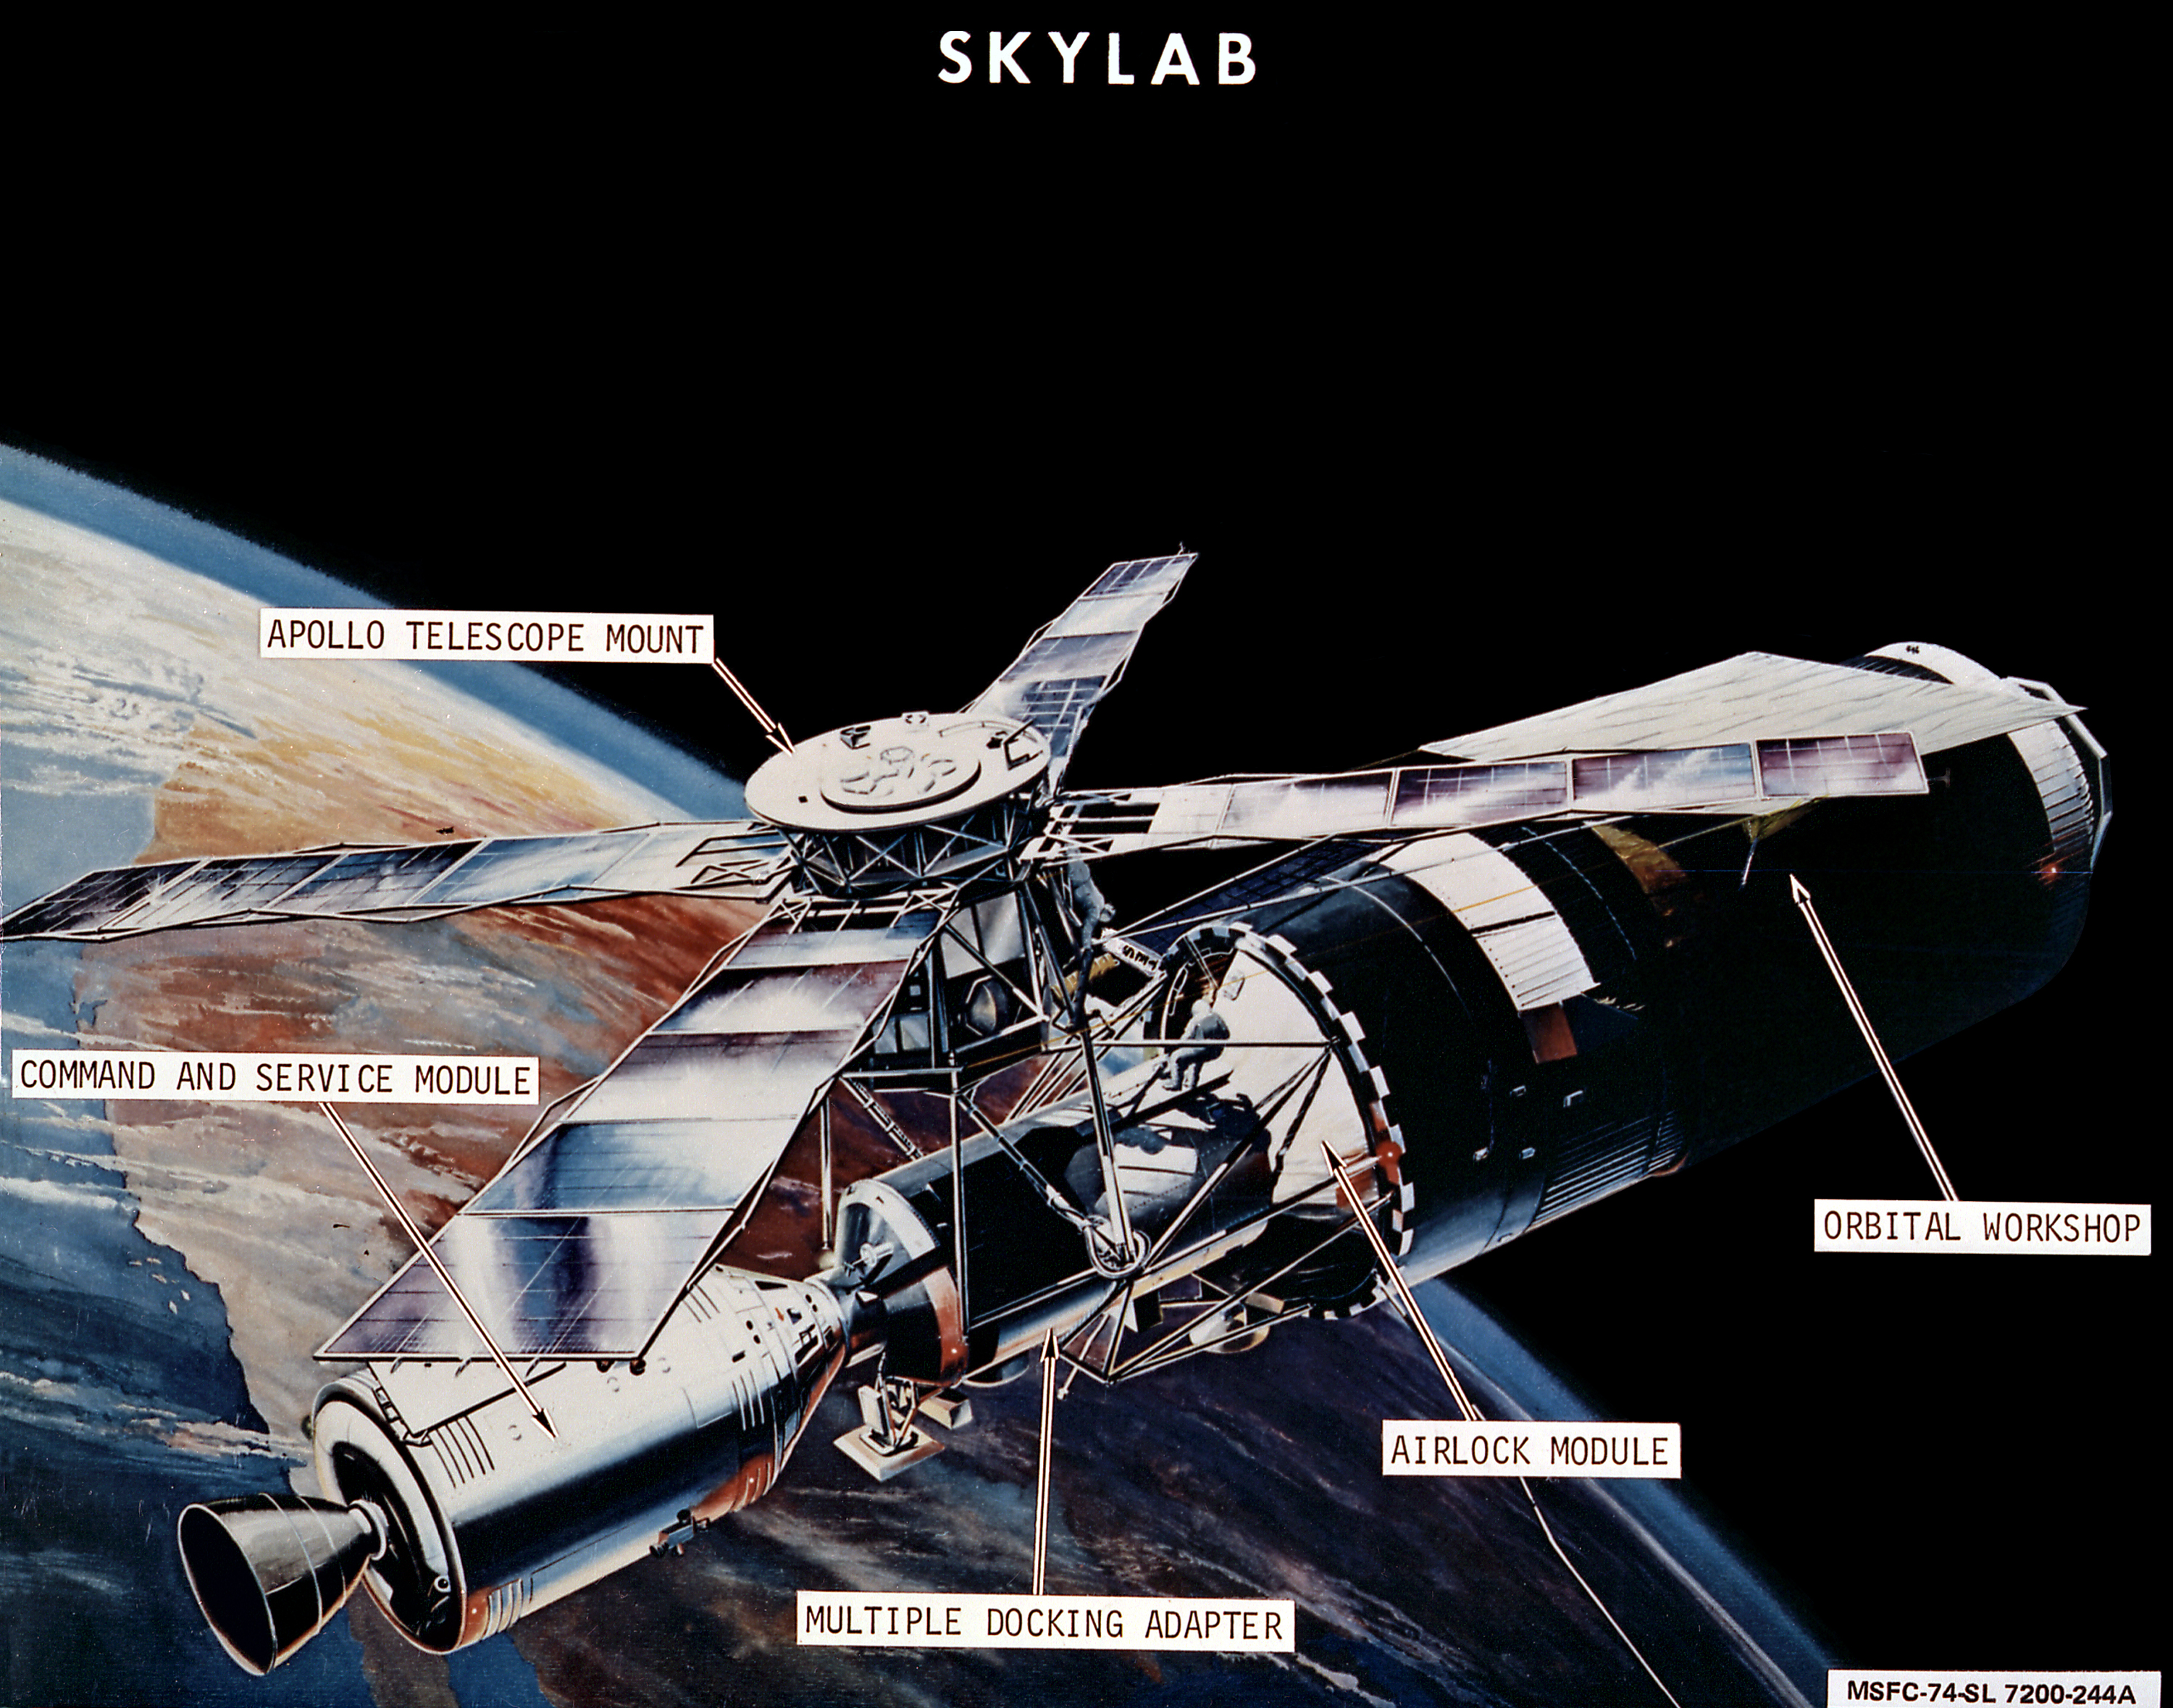 Skylab labeled